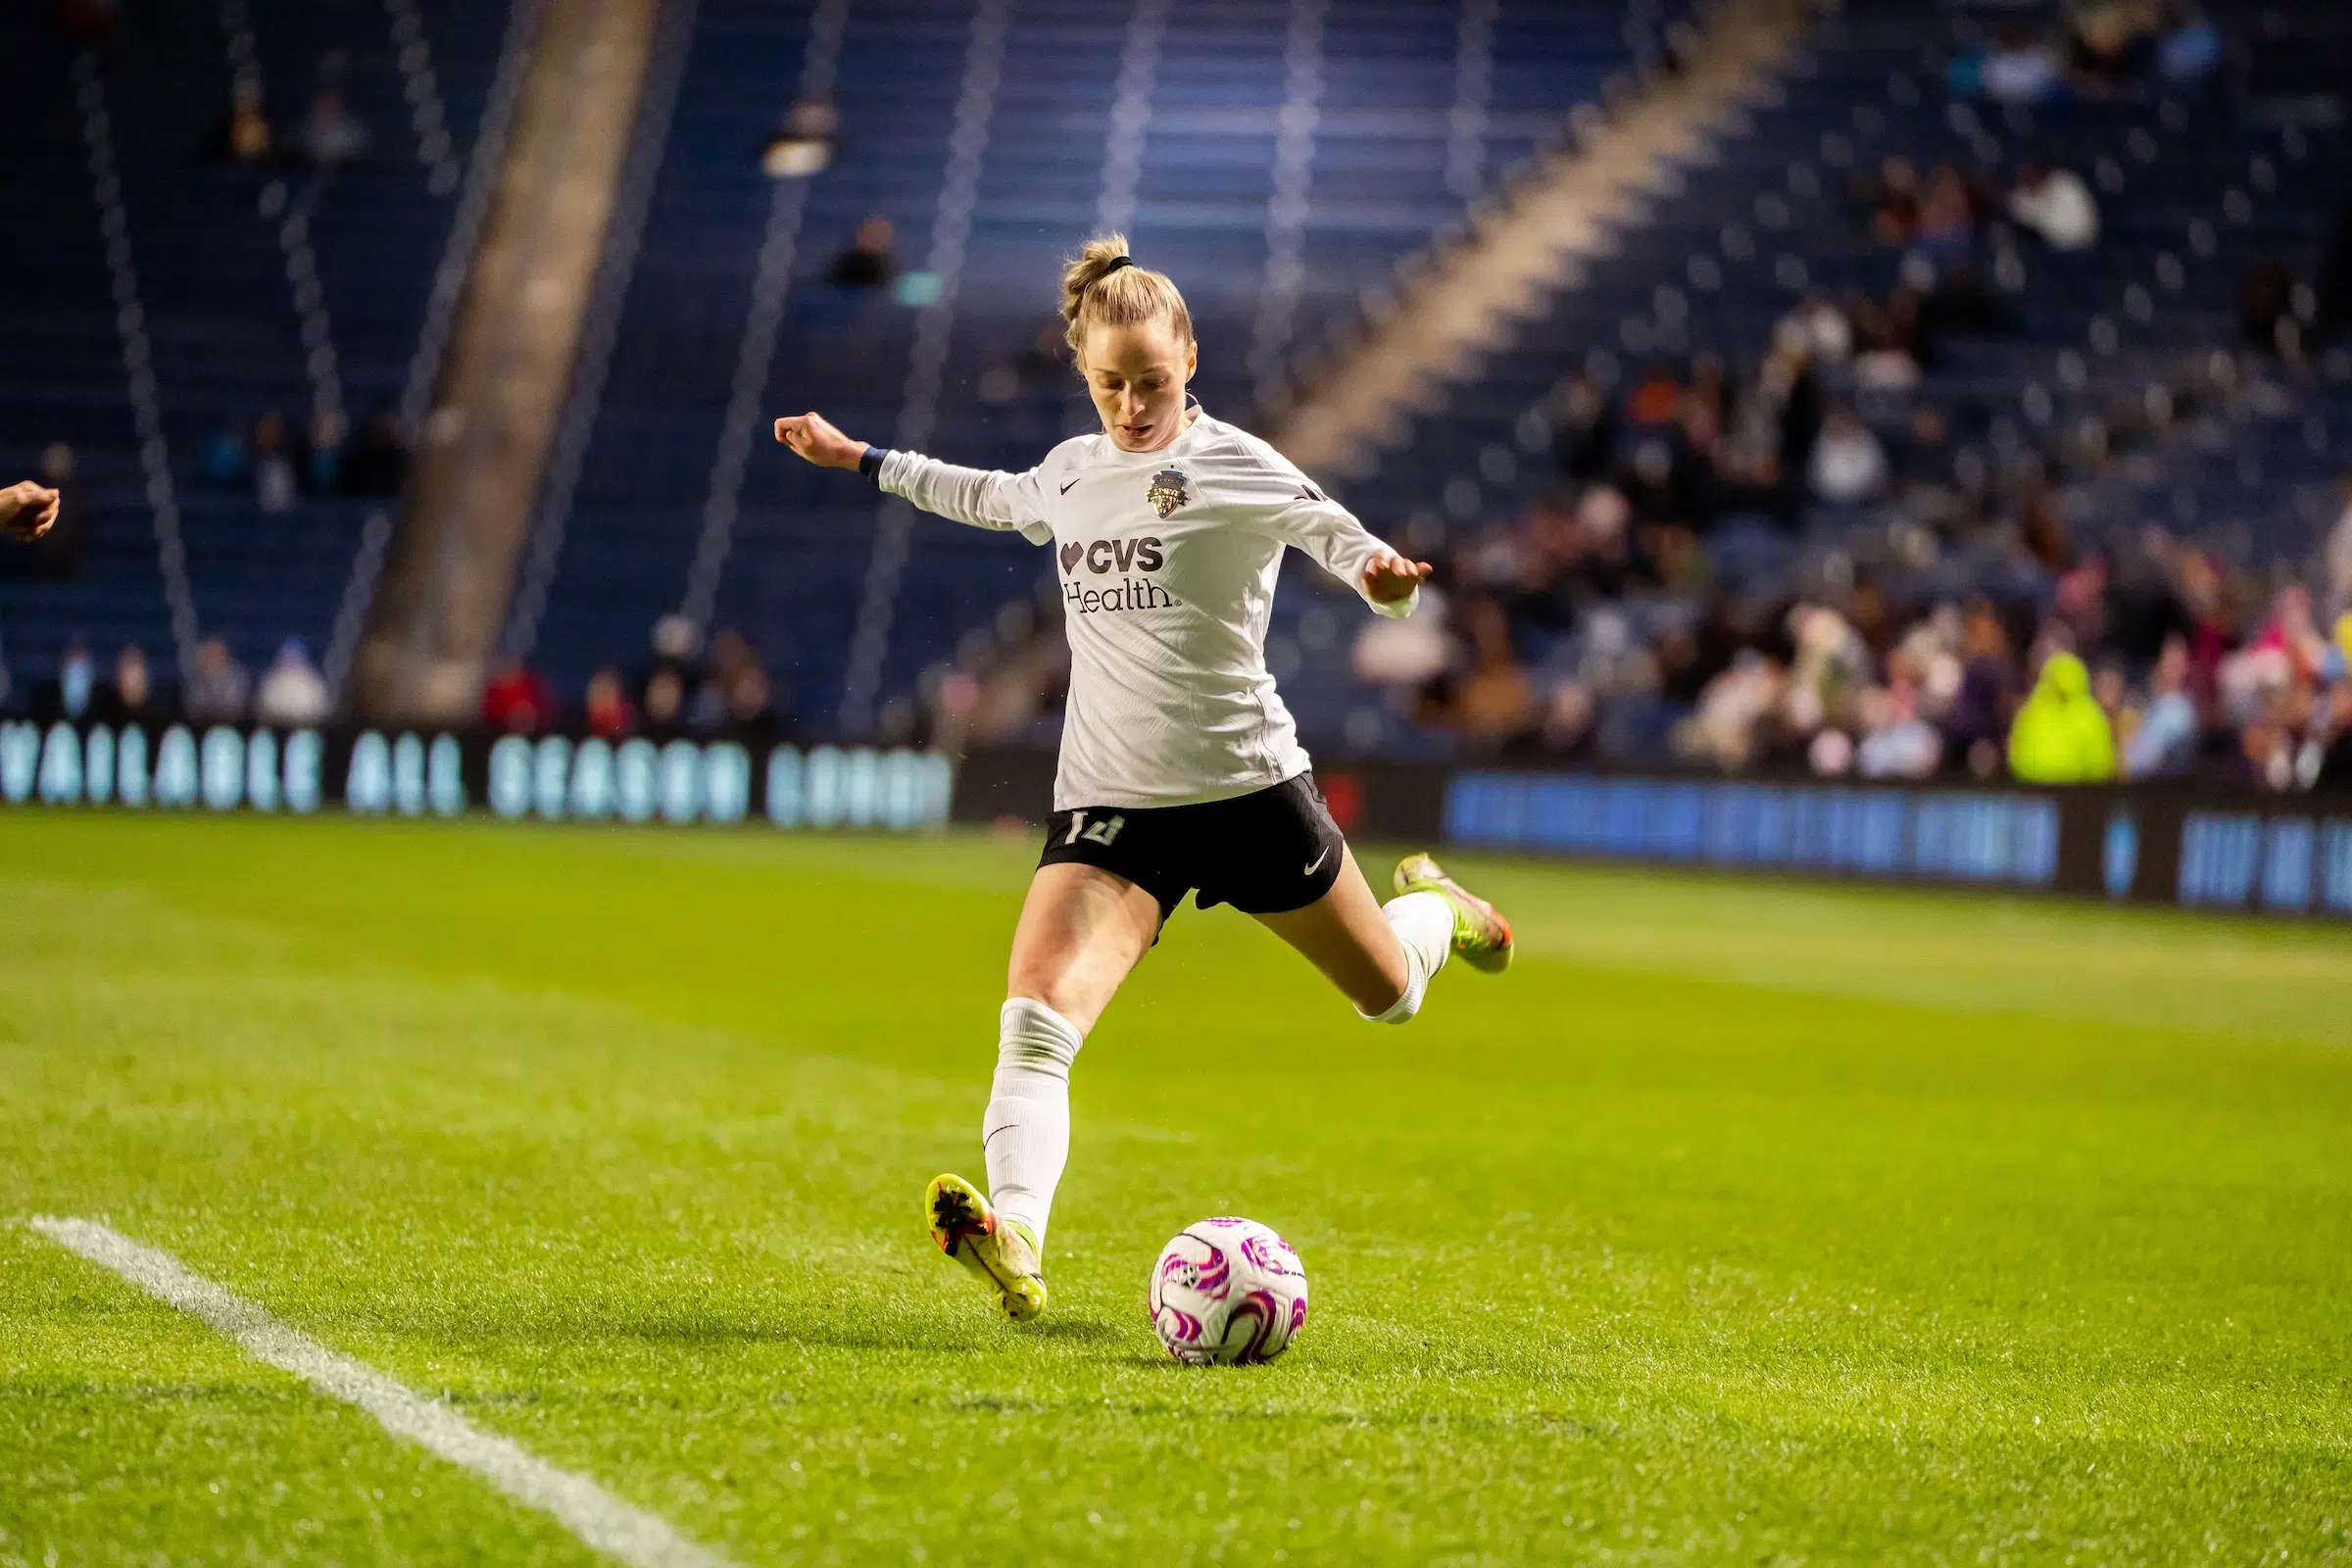 Gabby Carle in a long-sleeved white top, black shorts and white socks kicks a soccer ball.